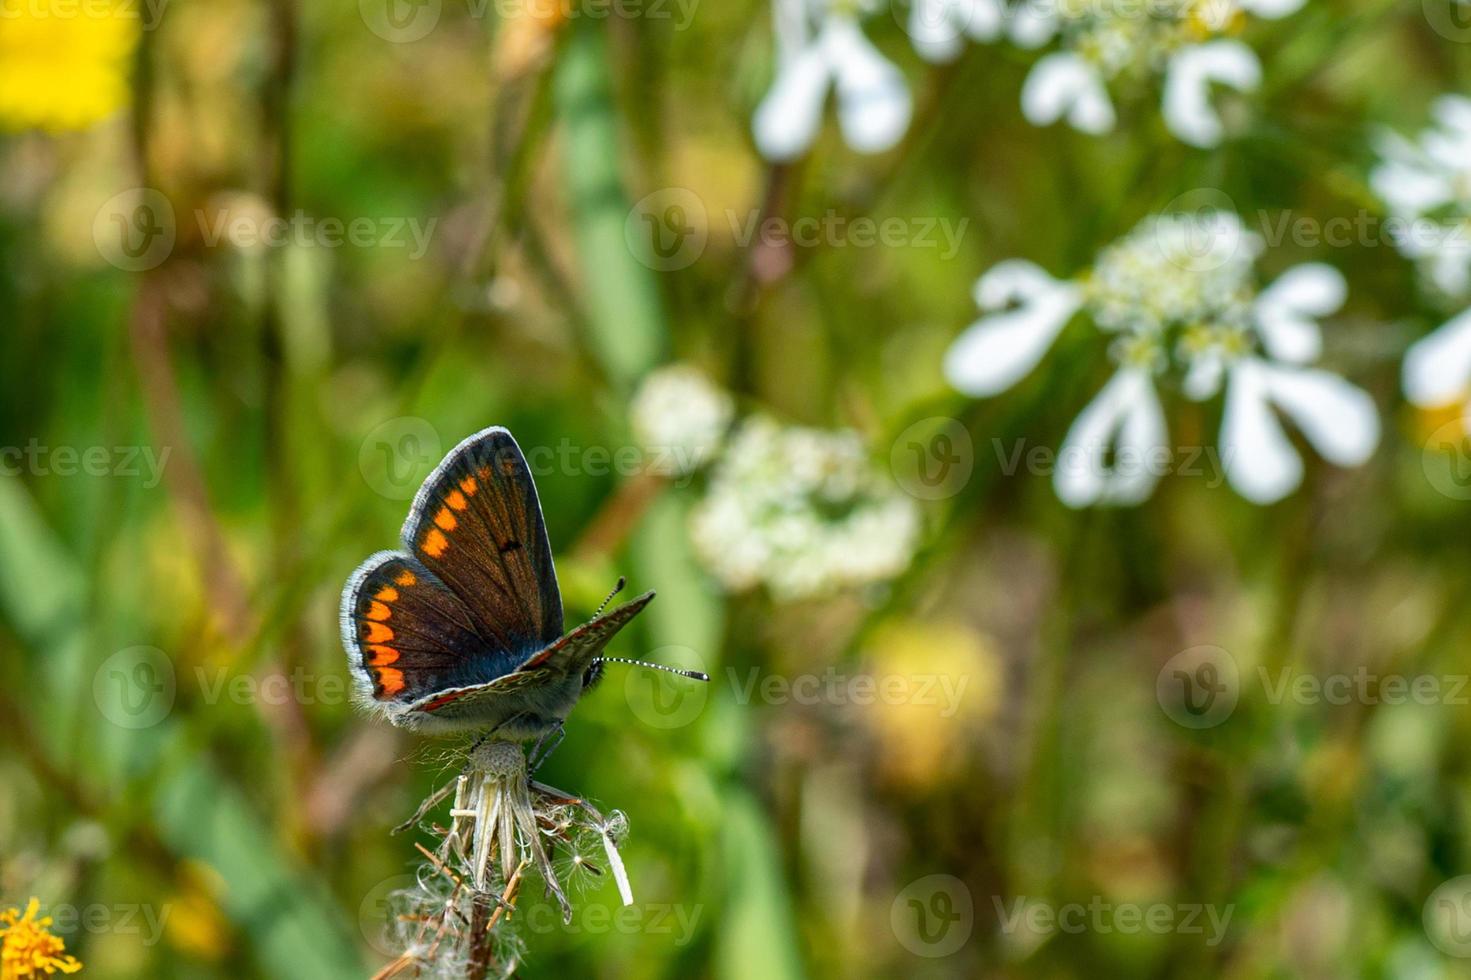 mariposa en flor foto